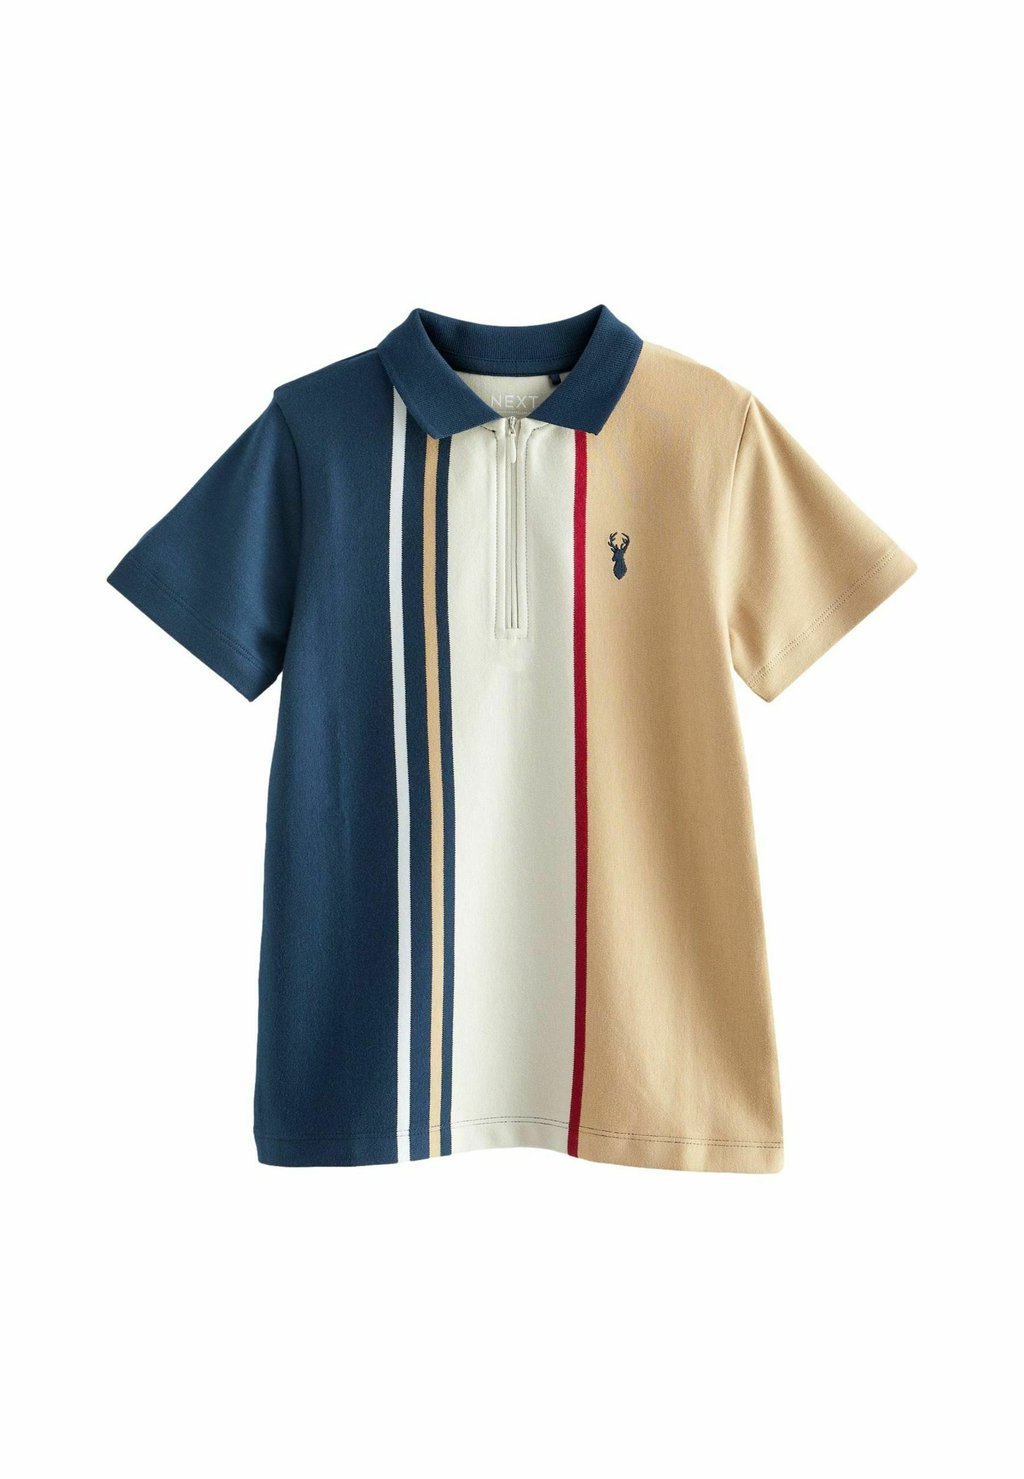 Рубашка-поло SHORT SLEEVE REGULAR FIT Next, цвет navyblue stone рубашка поло short sleeve regular fit next цвет blue